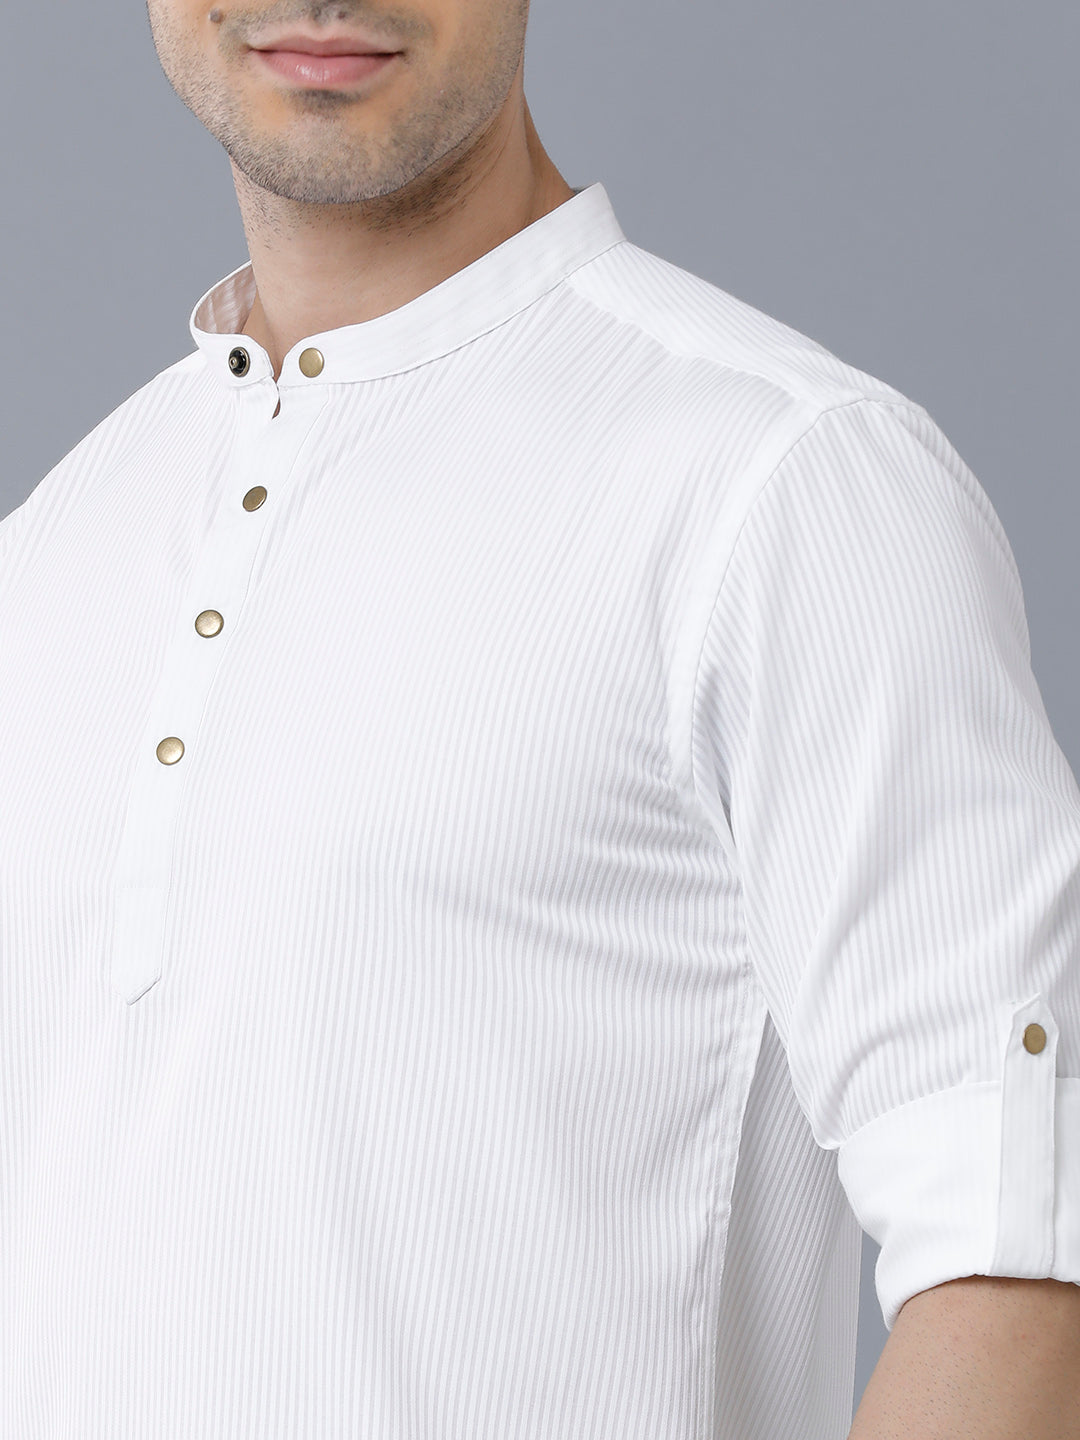 White kurta shirt